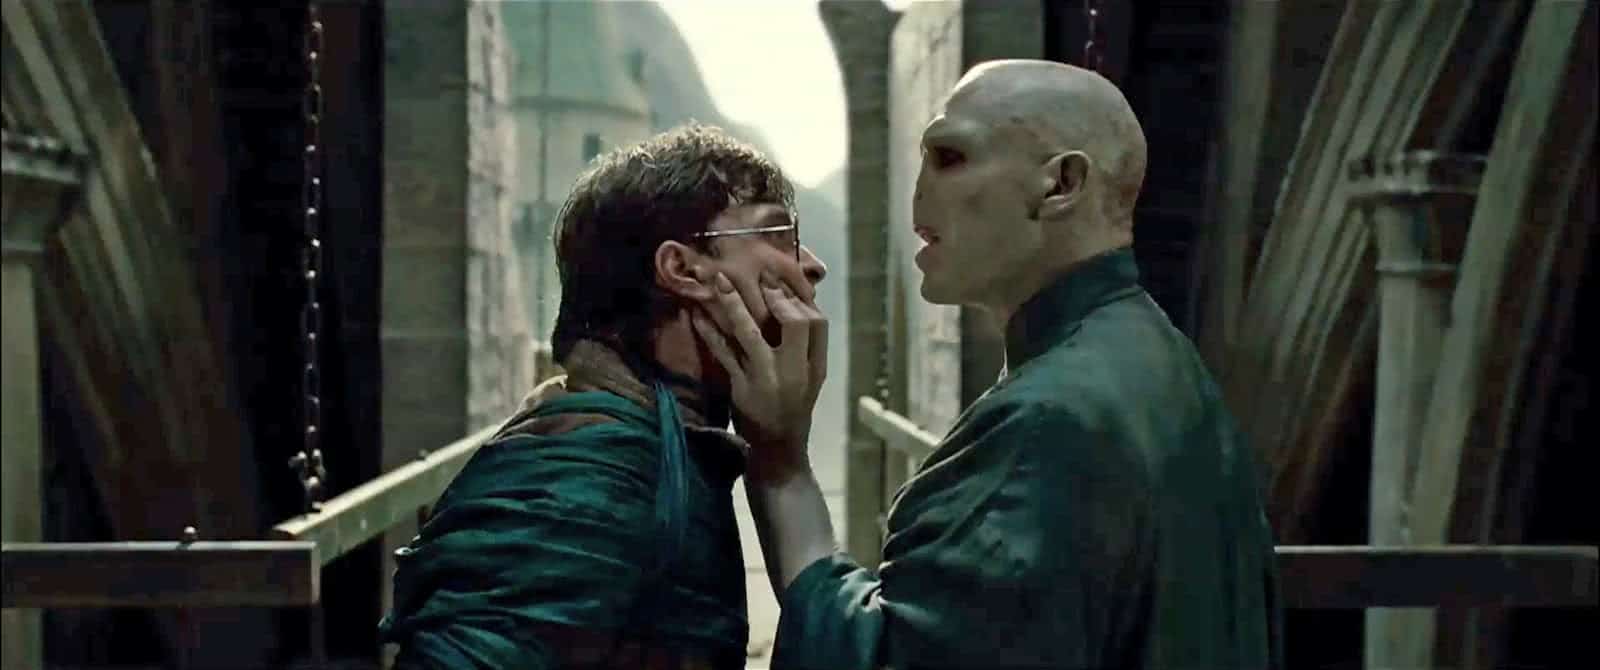 Harry Potter (Daniel Radcliffe) e Voldemort (Ralph Fiennes) na franquia Harry Potter (Reprodução Warner Bros.)